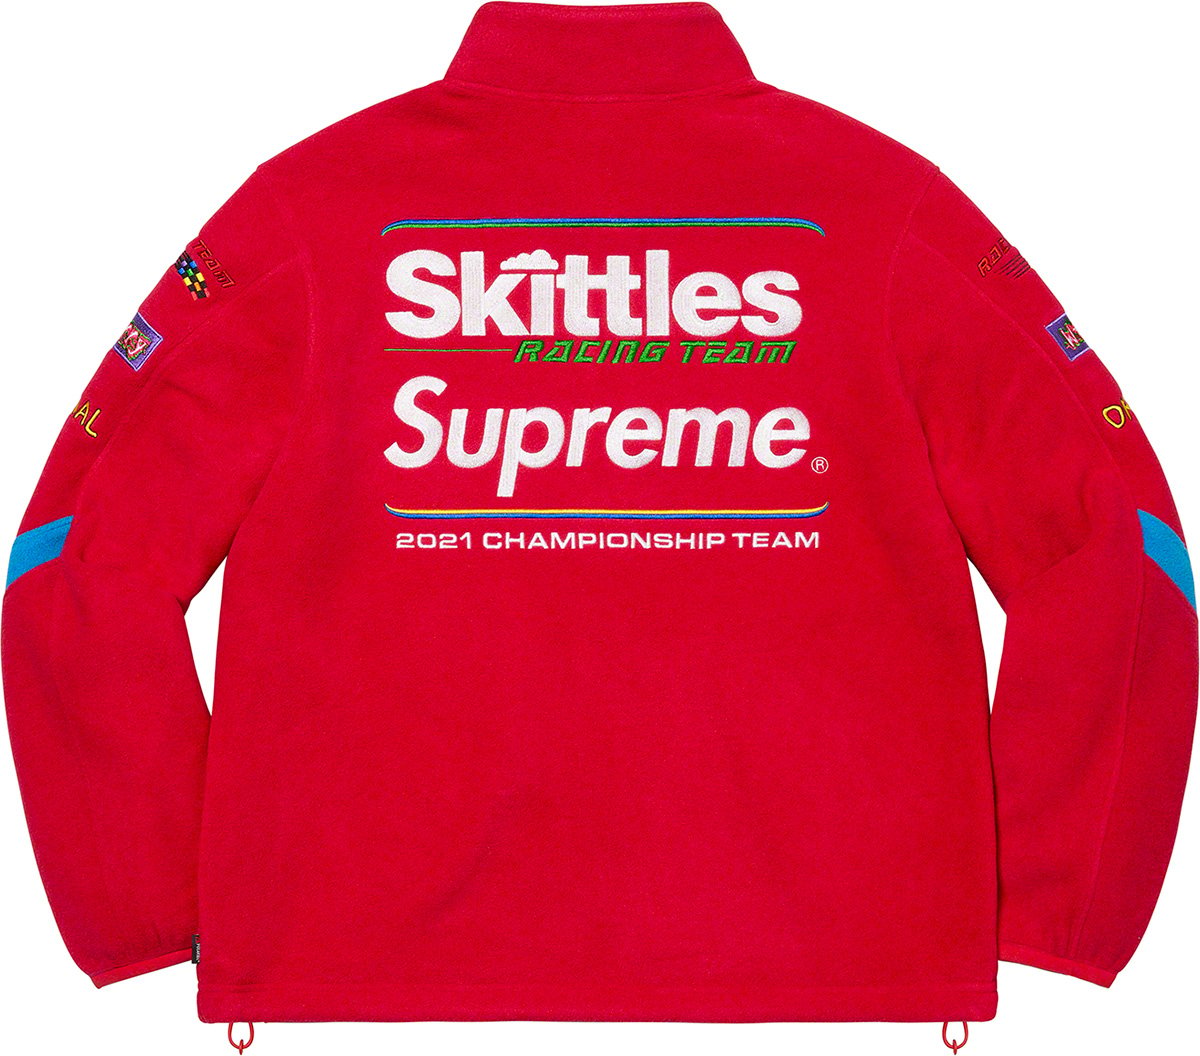 Skittles Polartec Jacket - fall winter 2021 - Supreme